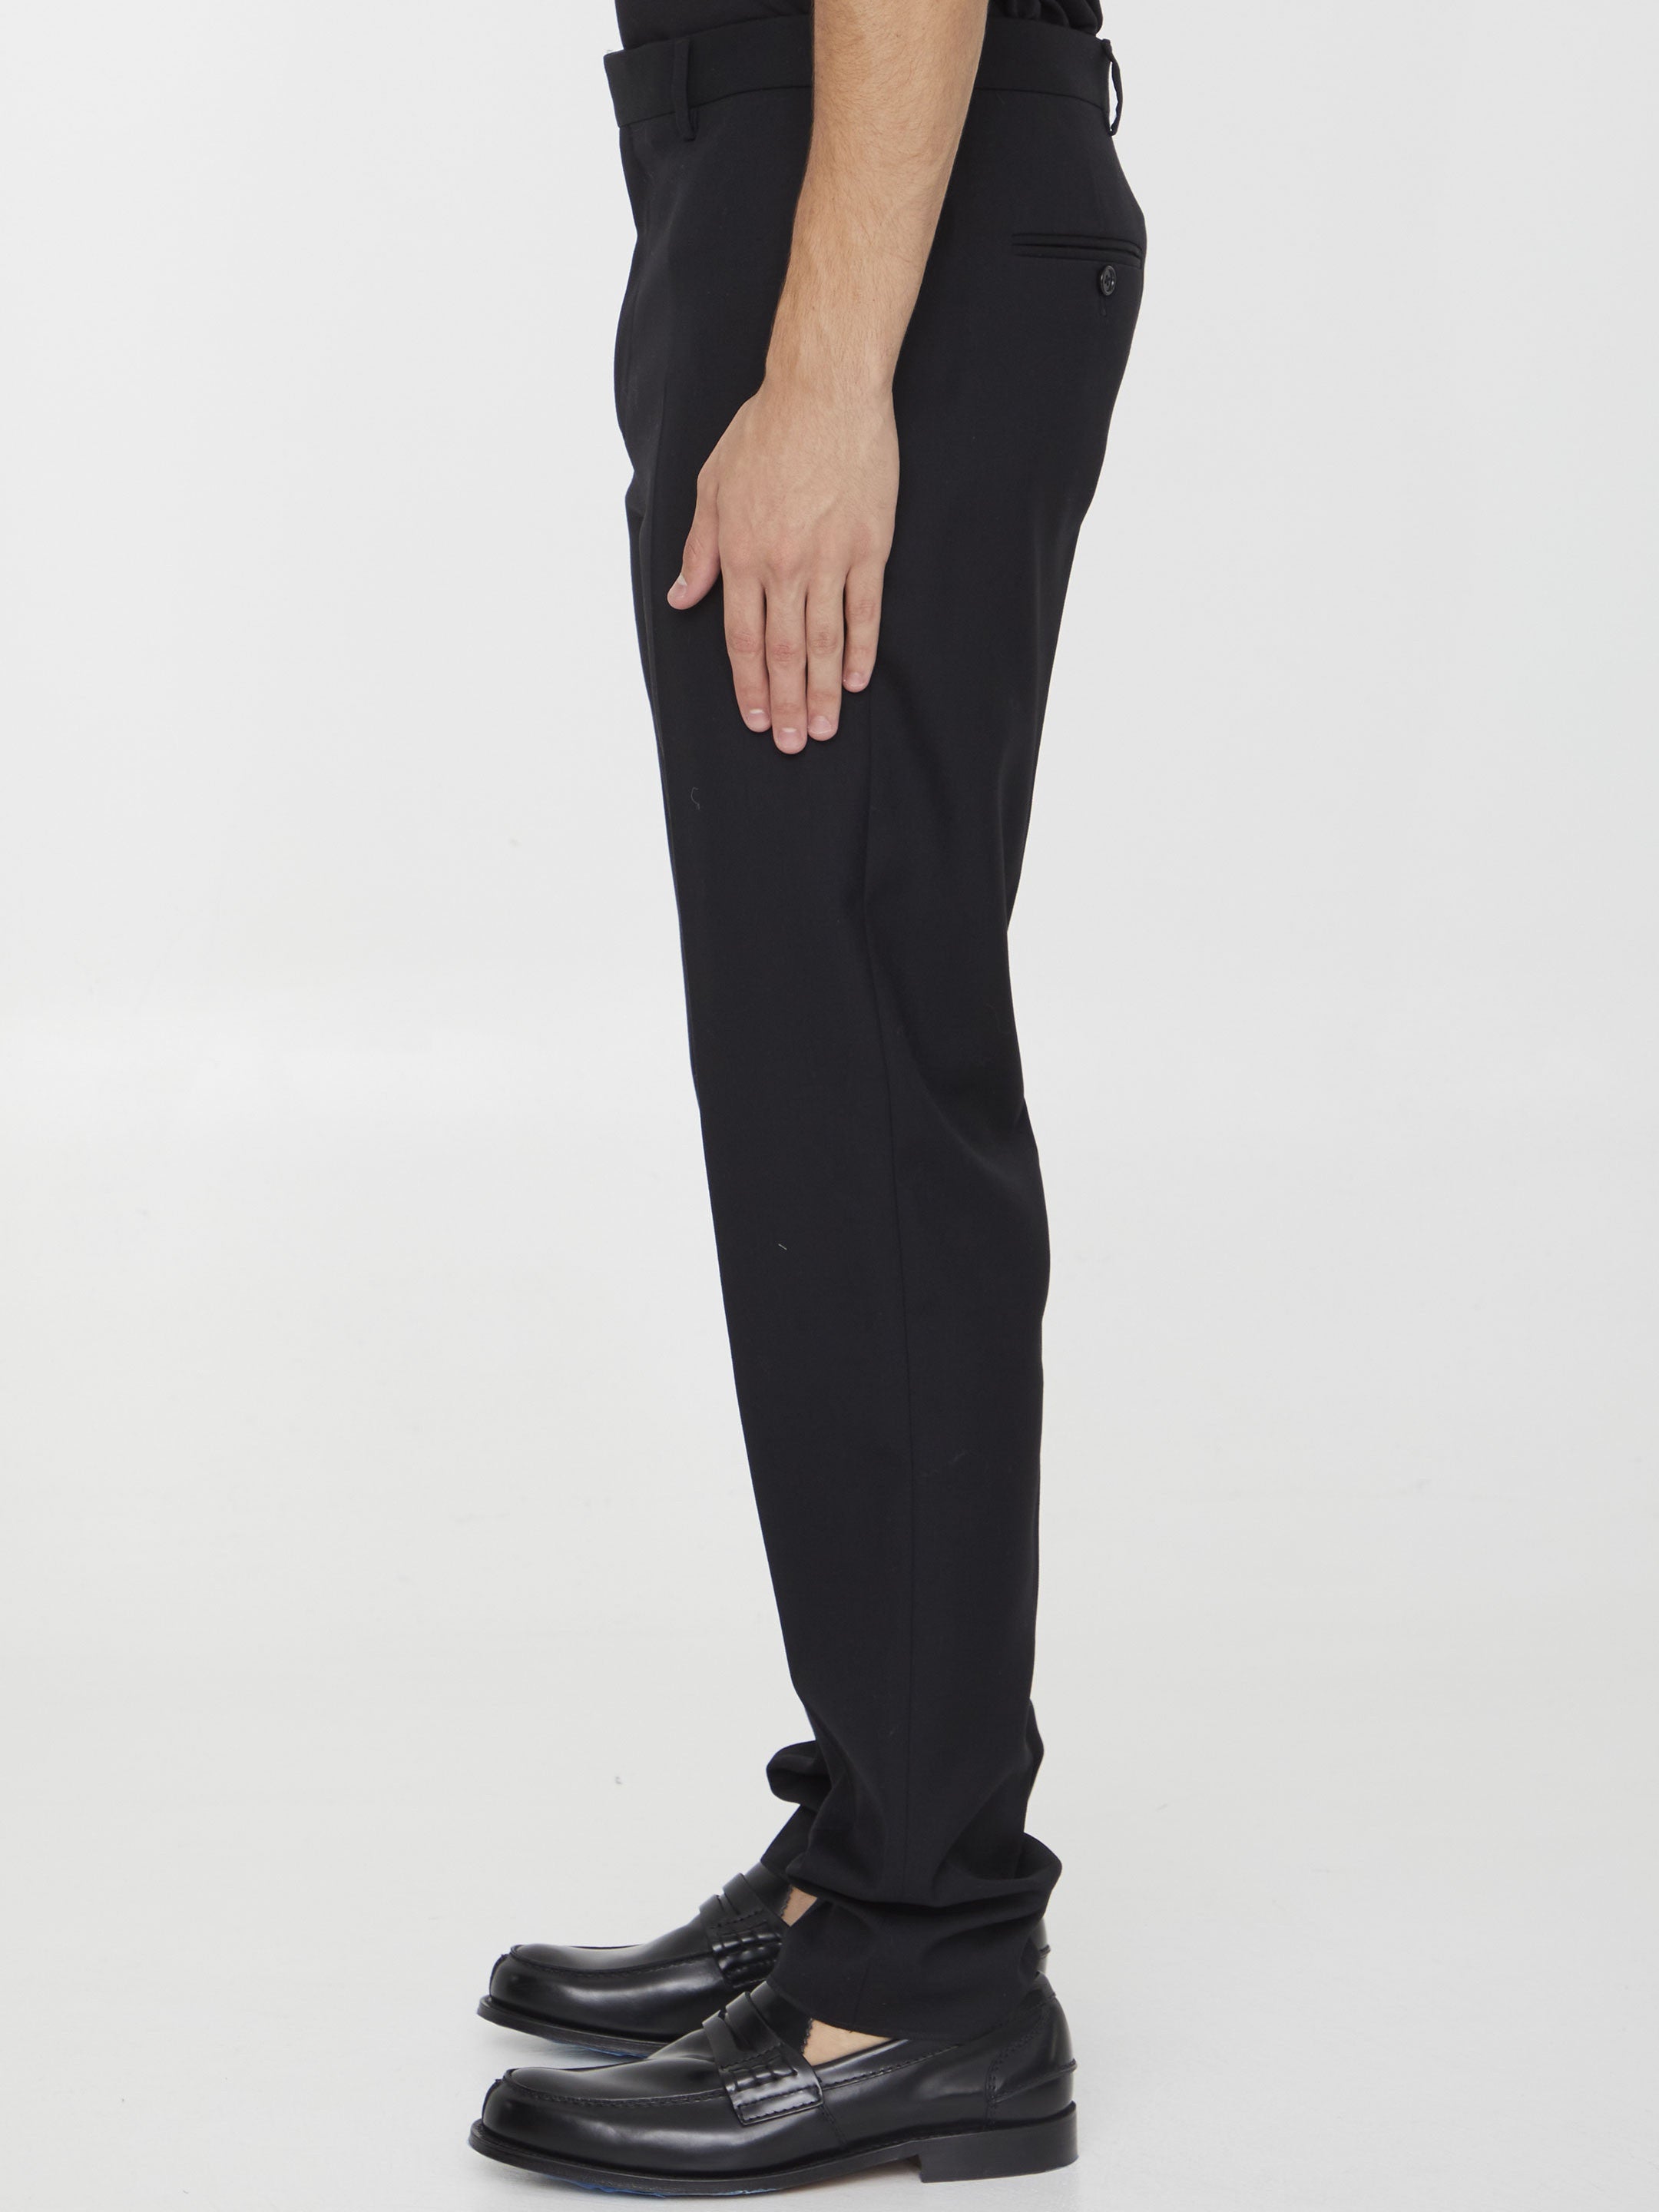 CELINE-OUTLET-SALE-Wool-gabardine-trousers-Hosen-50-BLACK-ARCHIVE-COLLECTION-3.jpg